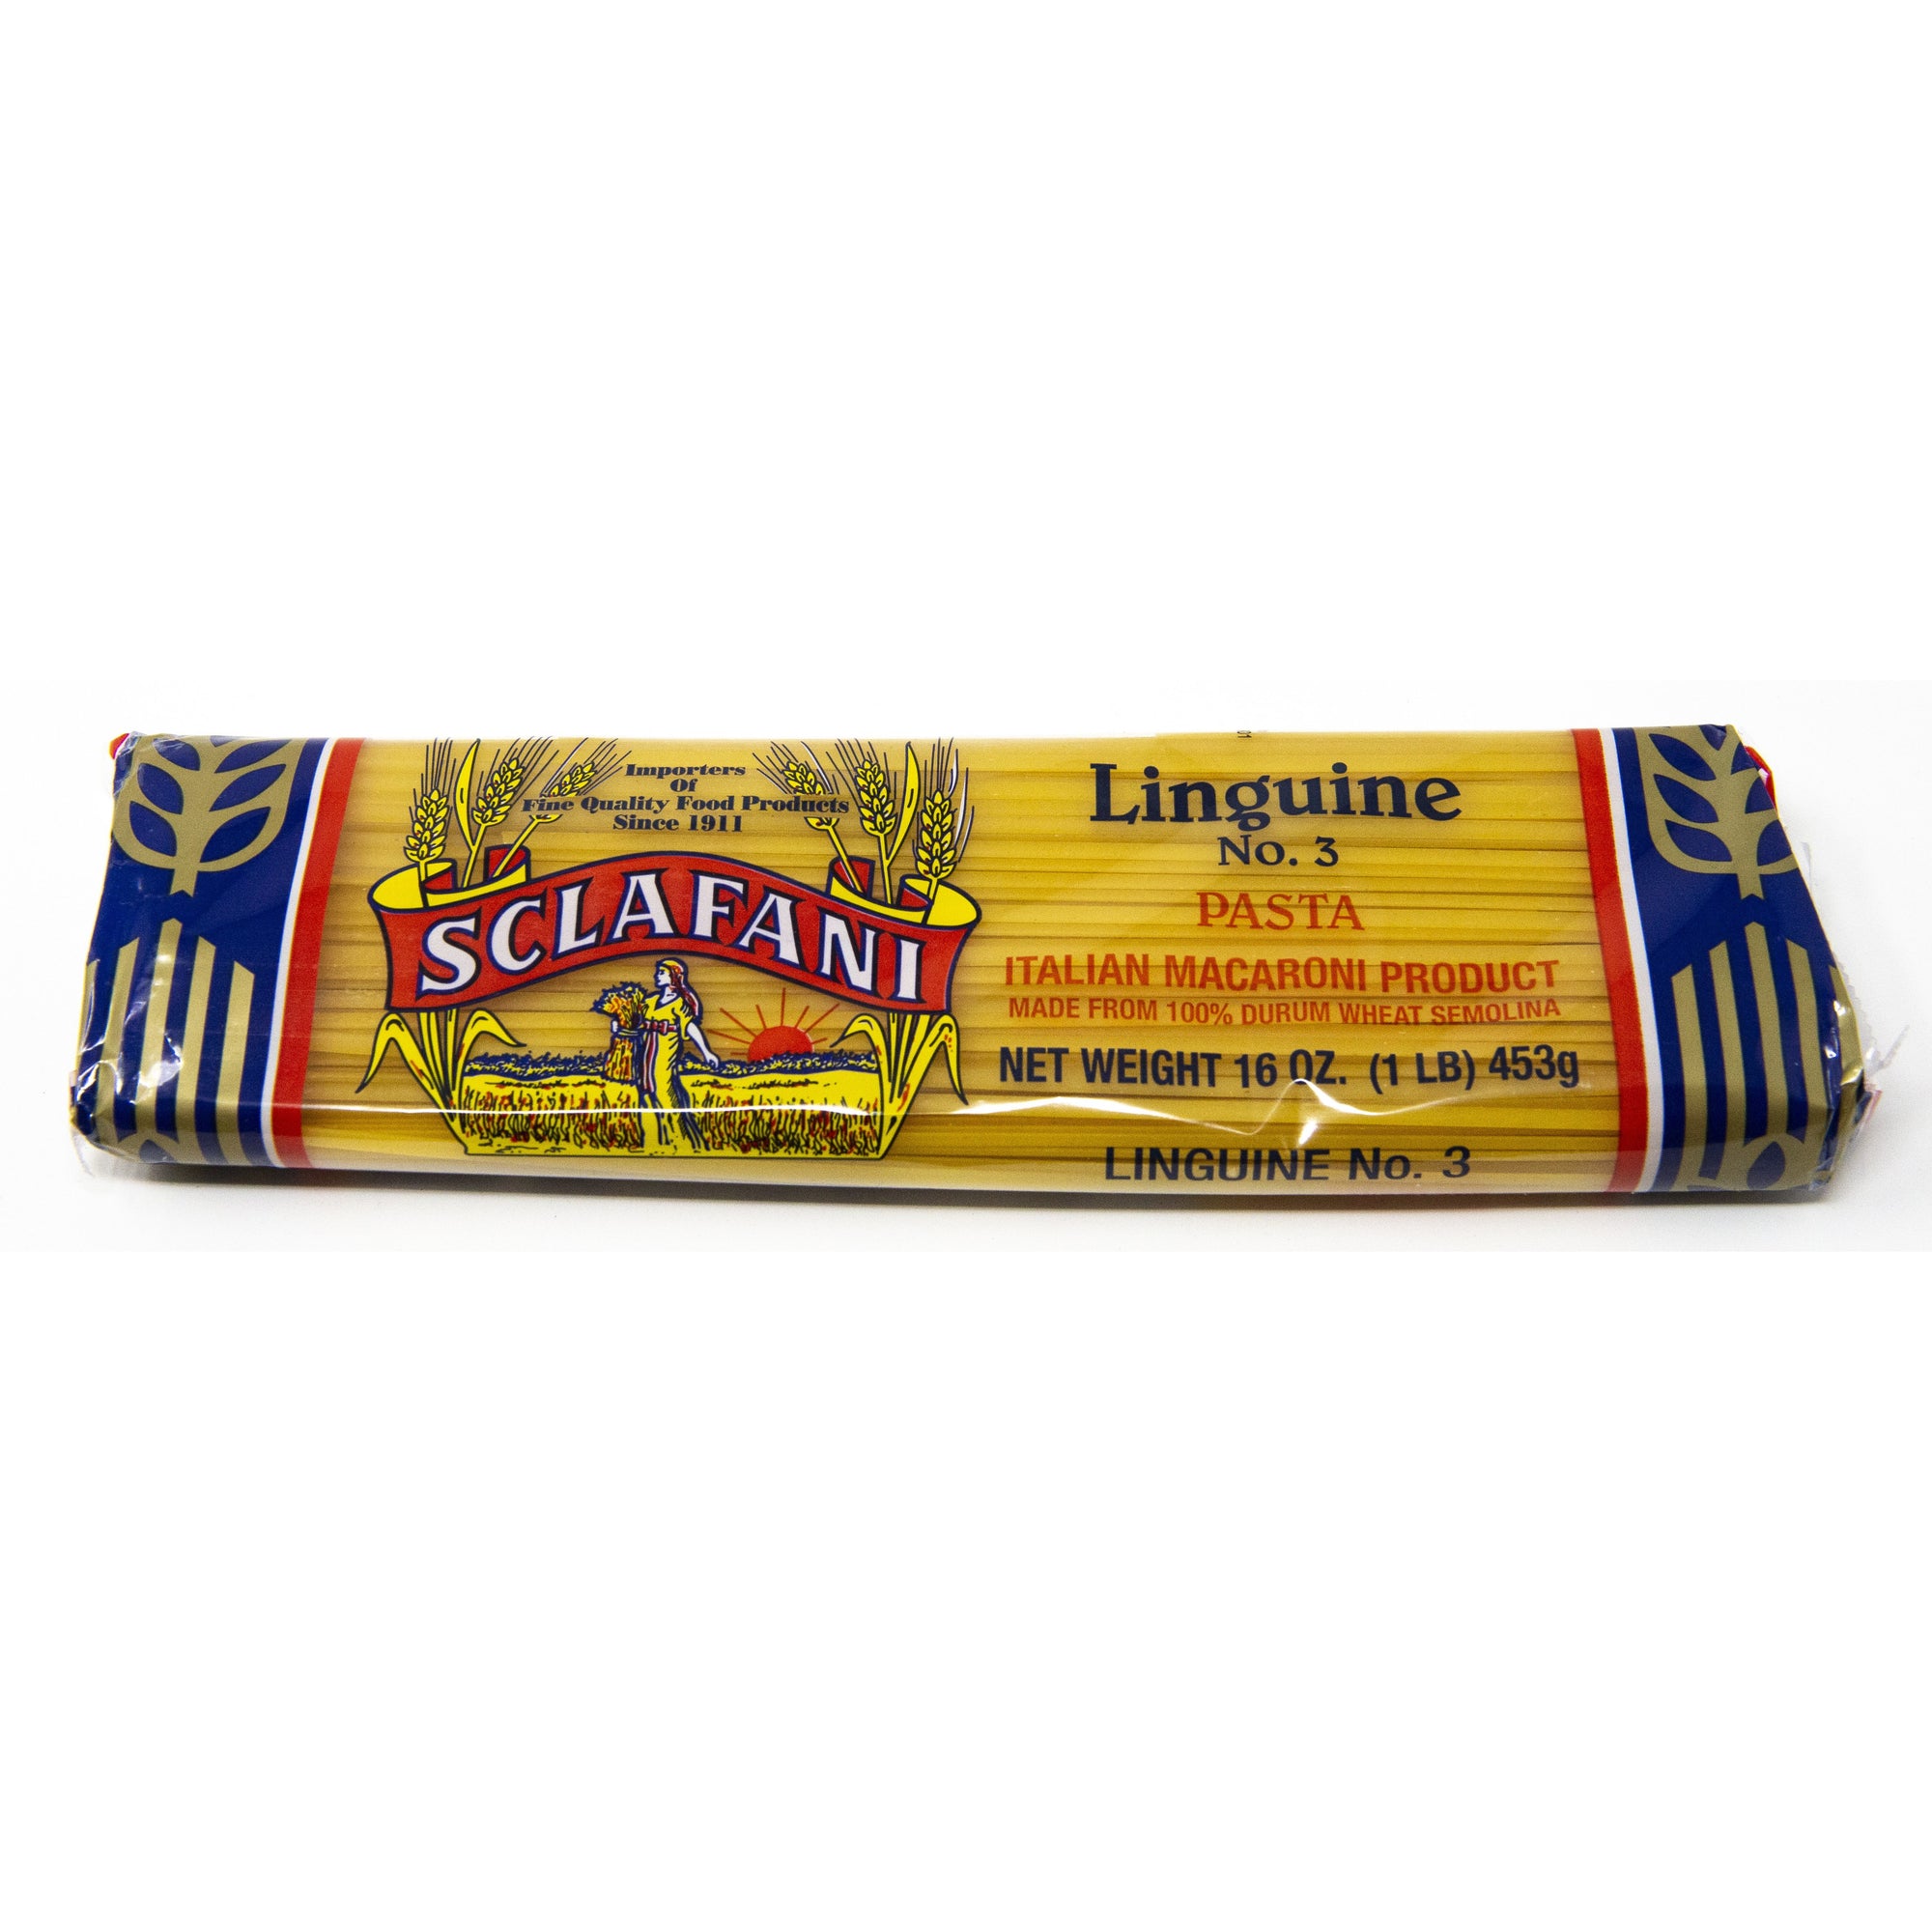 Sclafani Pasta #3 Linguine 1 lb.